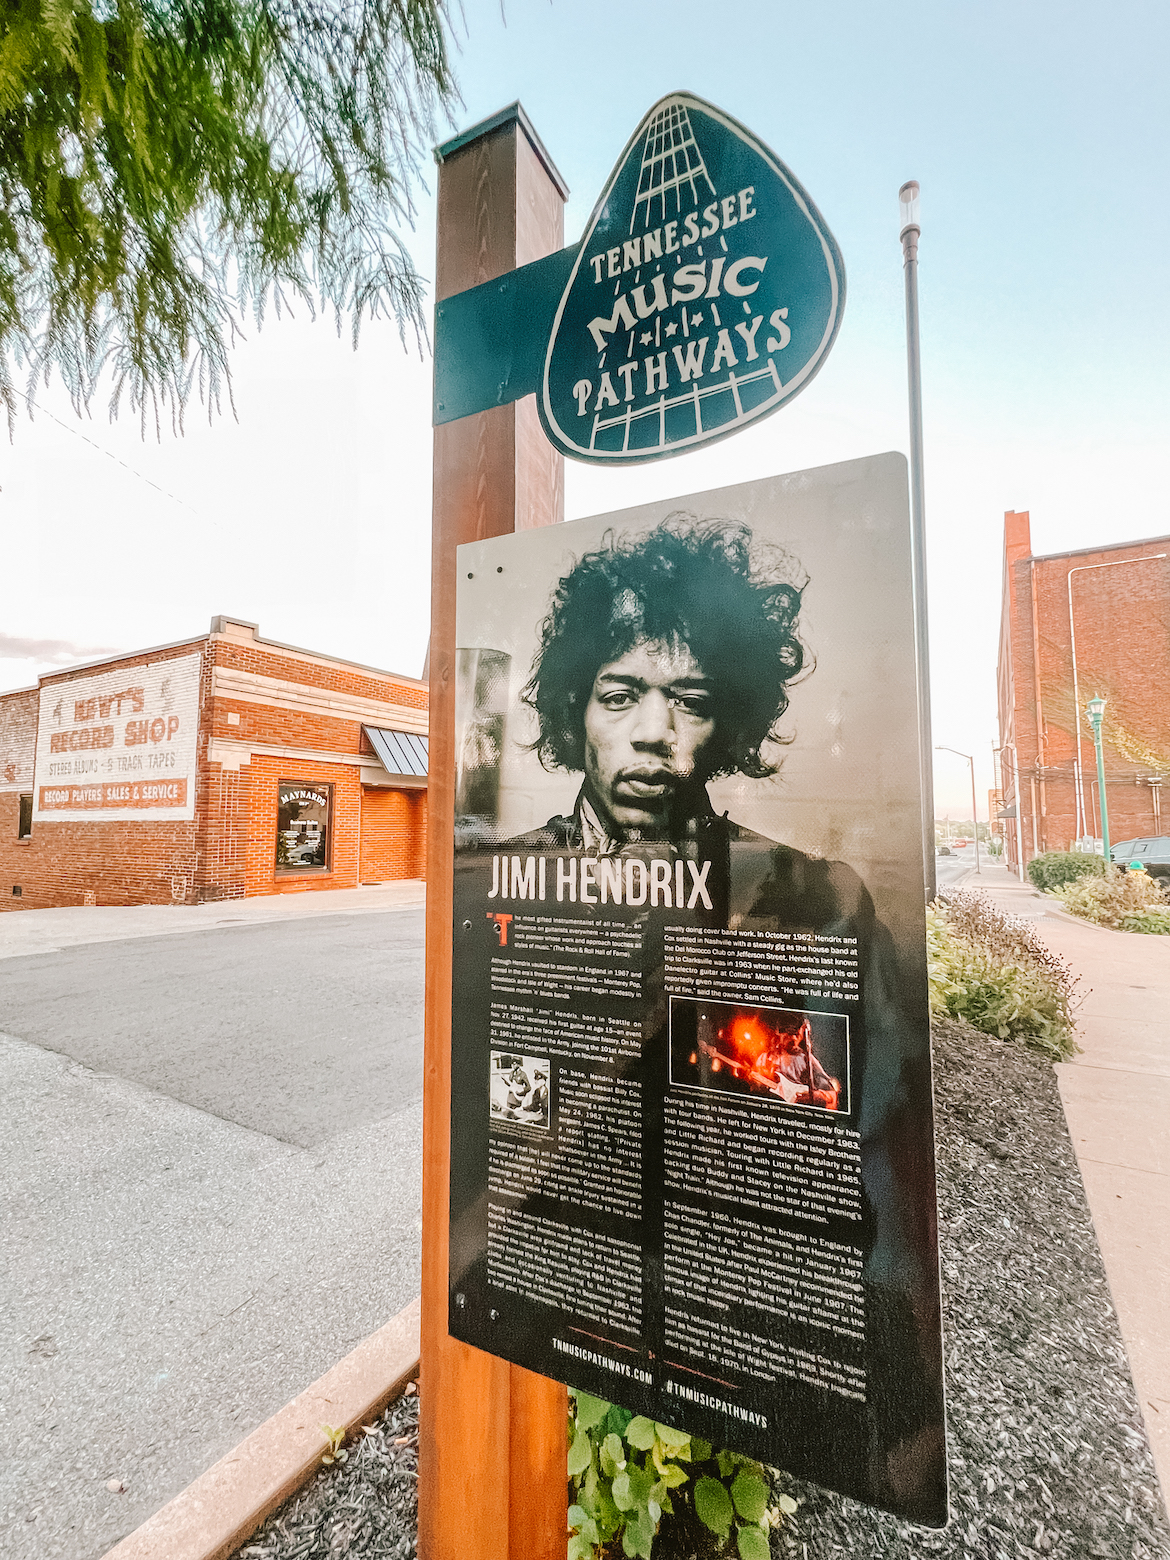 The Jimi Hendrix marker in Clarksville, Tennessee